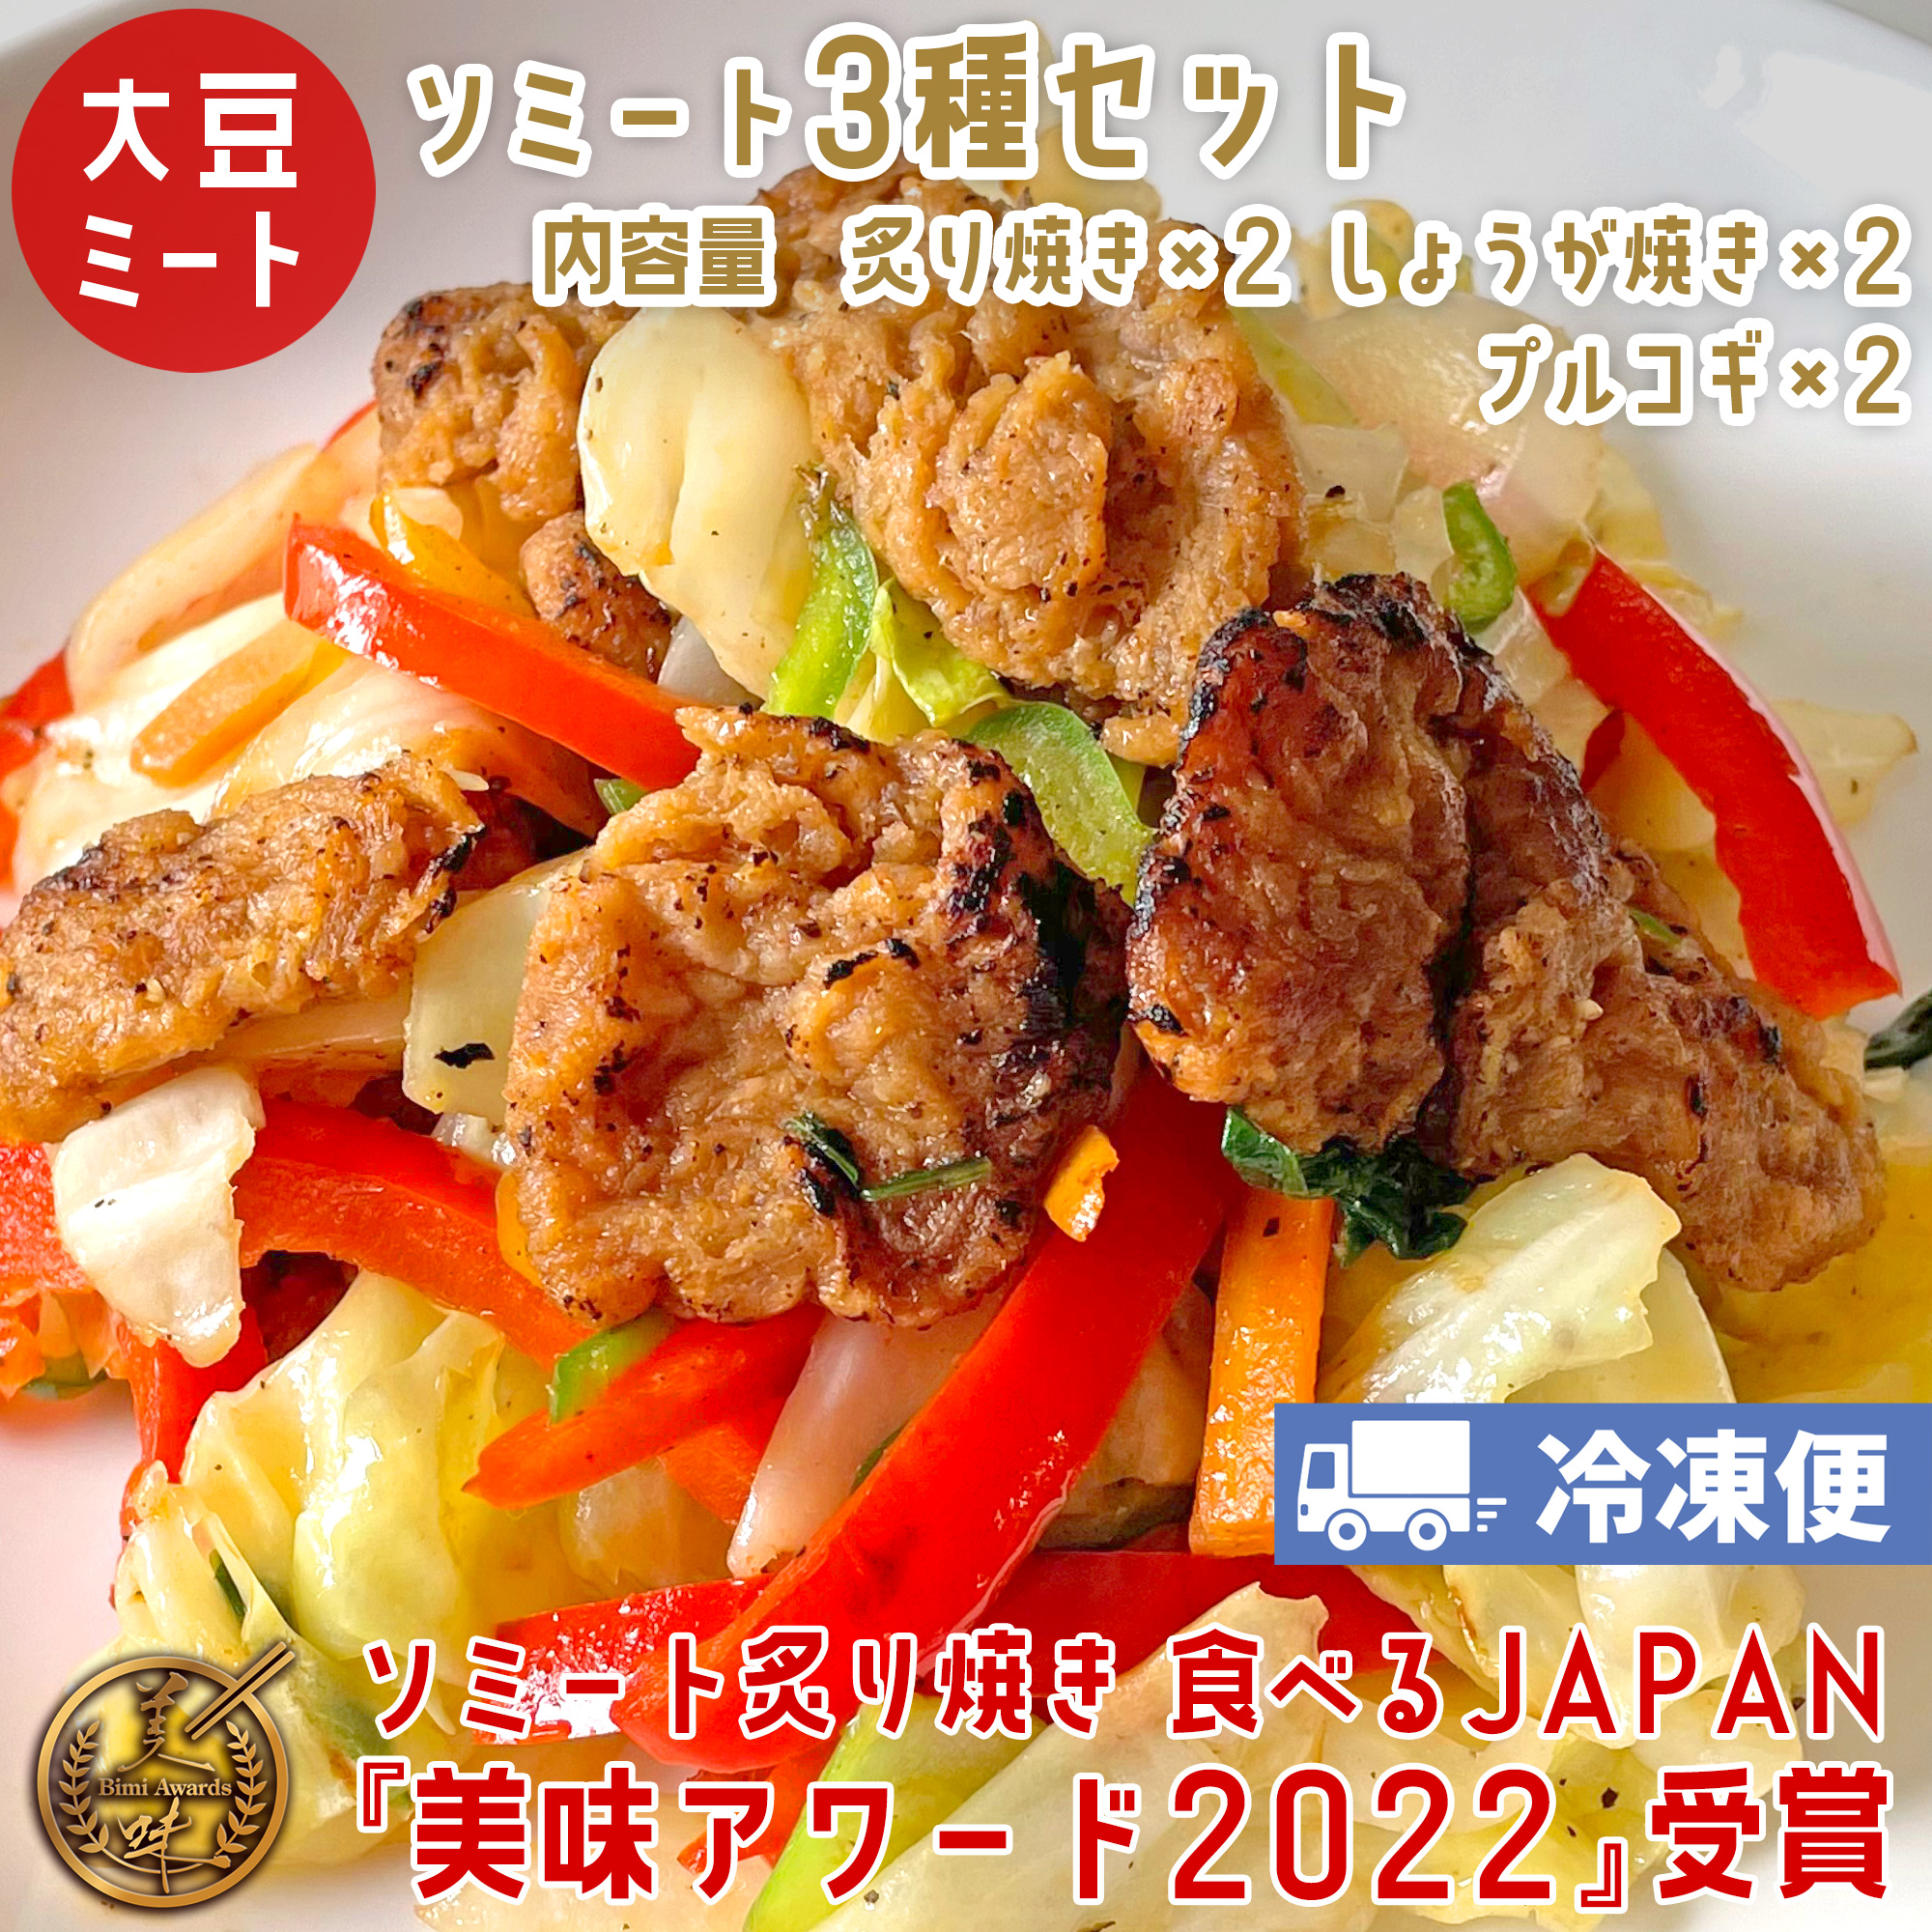 Shogayaki (Ginger “Pork”)